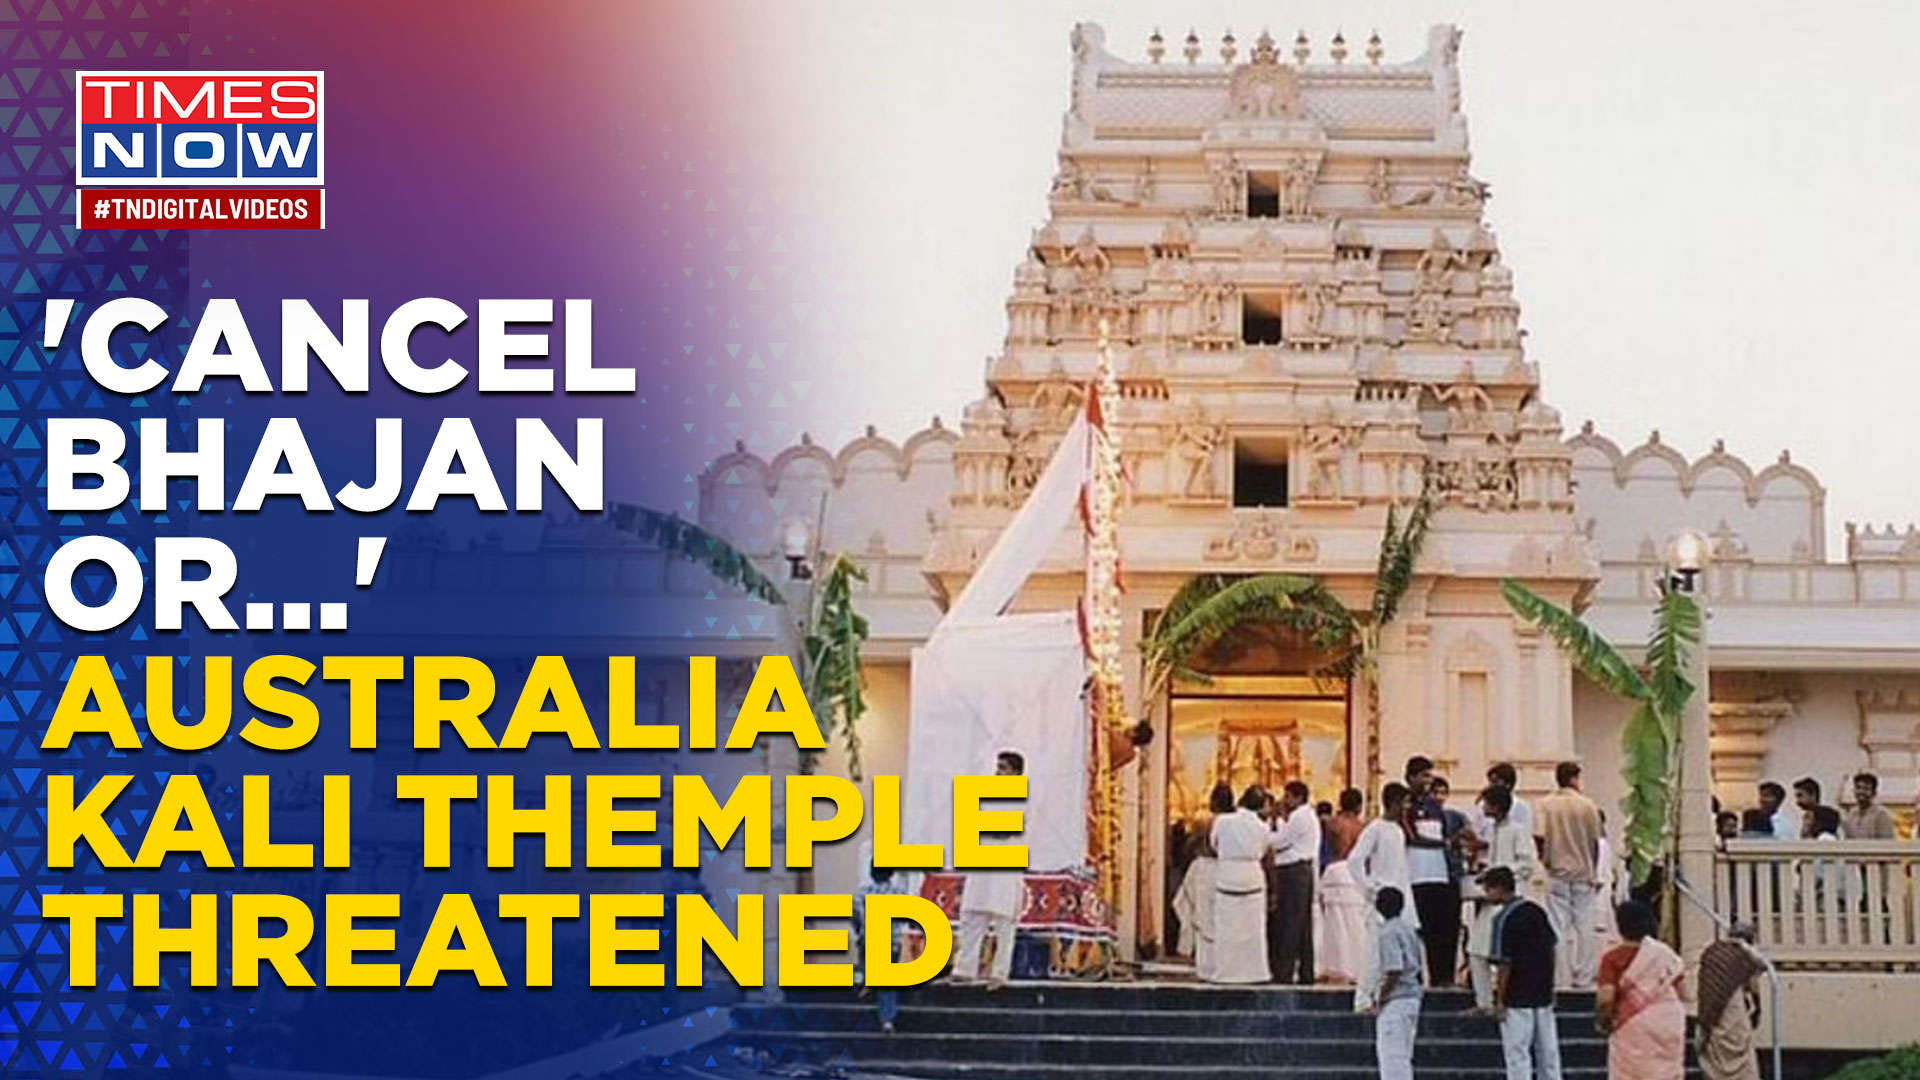 Pakistan-backed group asks Australia temple to raise pro-Khalistani slogan  on Maha Shivratri